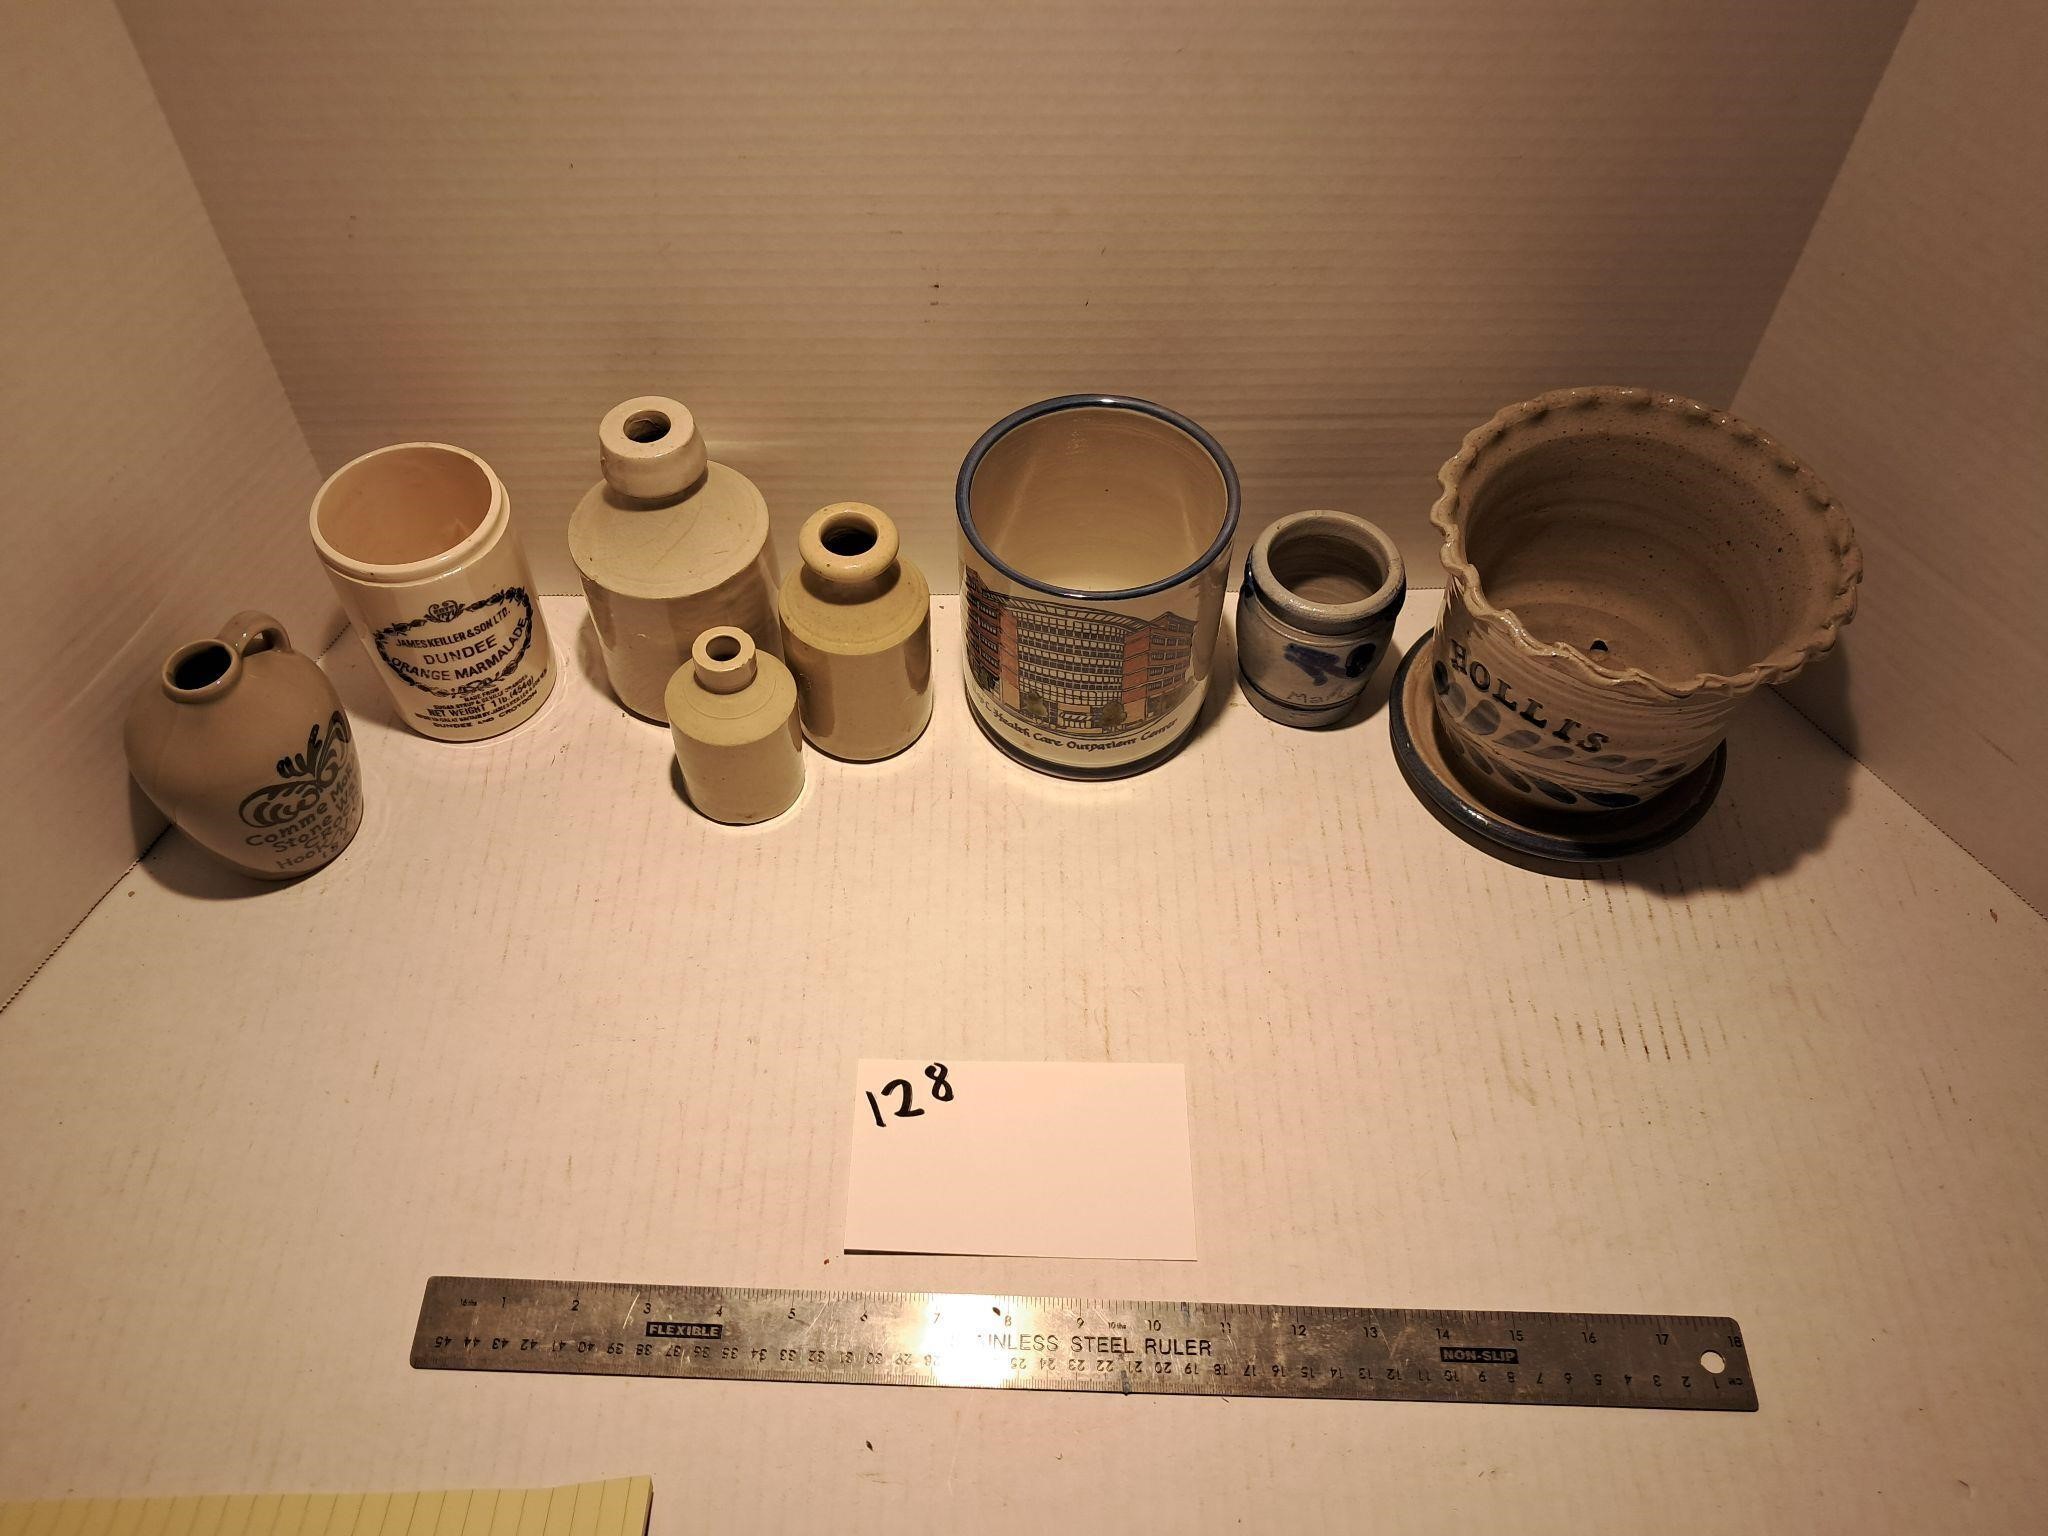 Small crock jugs and pottery